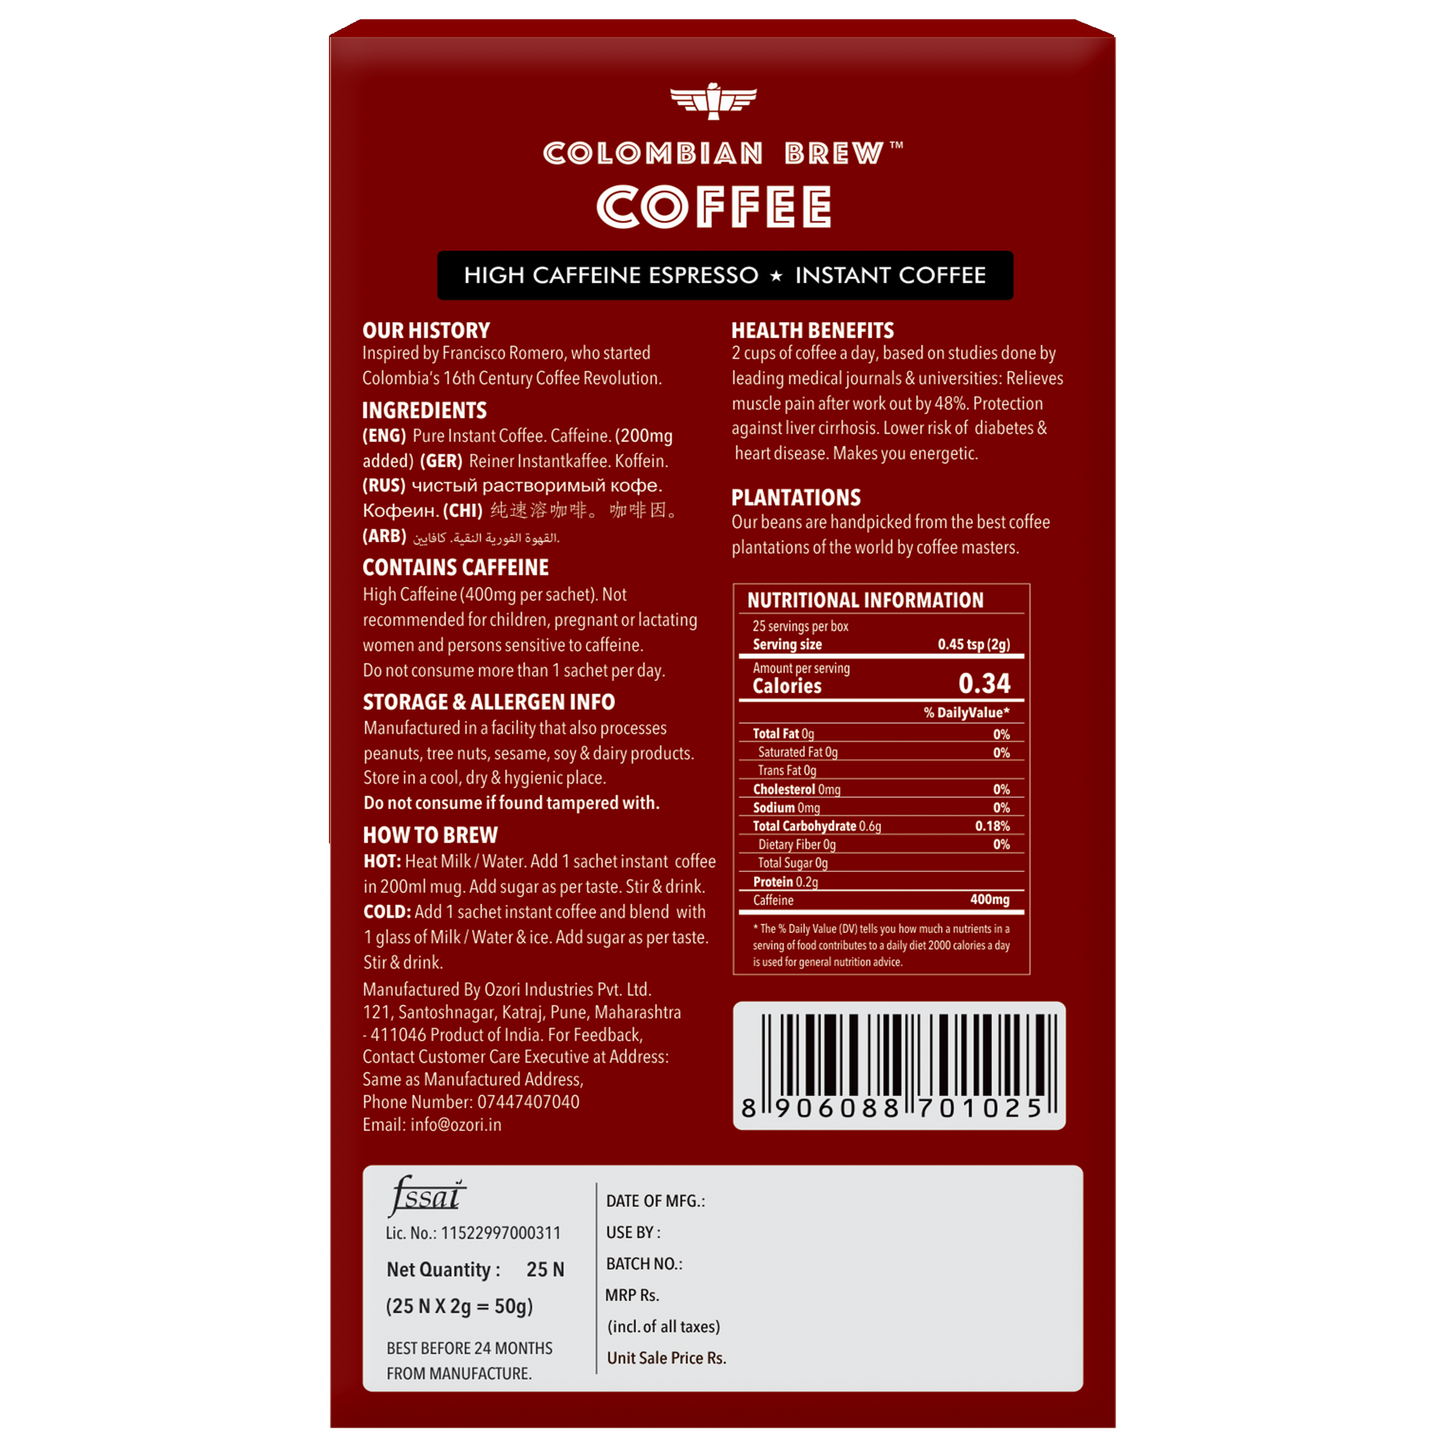 High Caffeine Espresso Instant Coffee Powder, Strong, 50g 